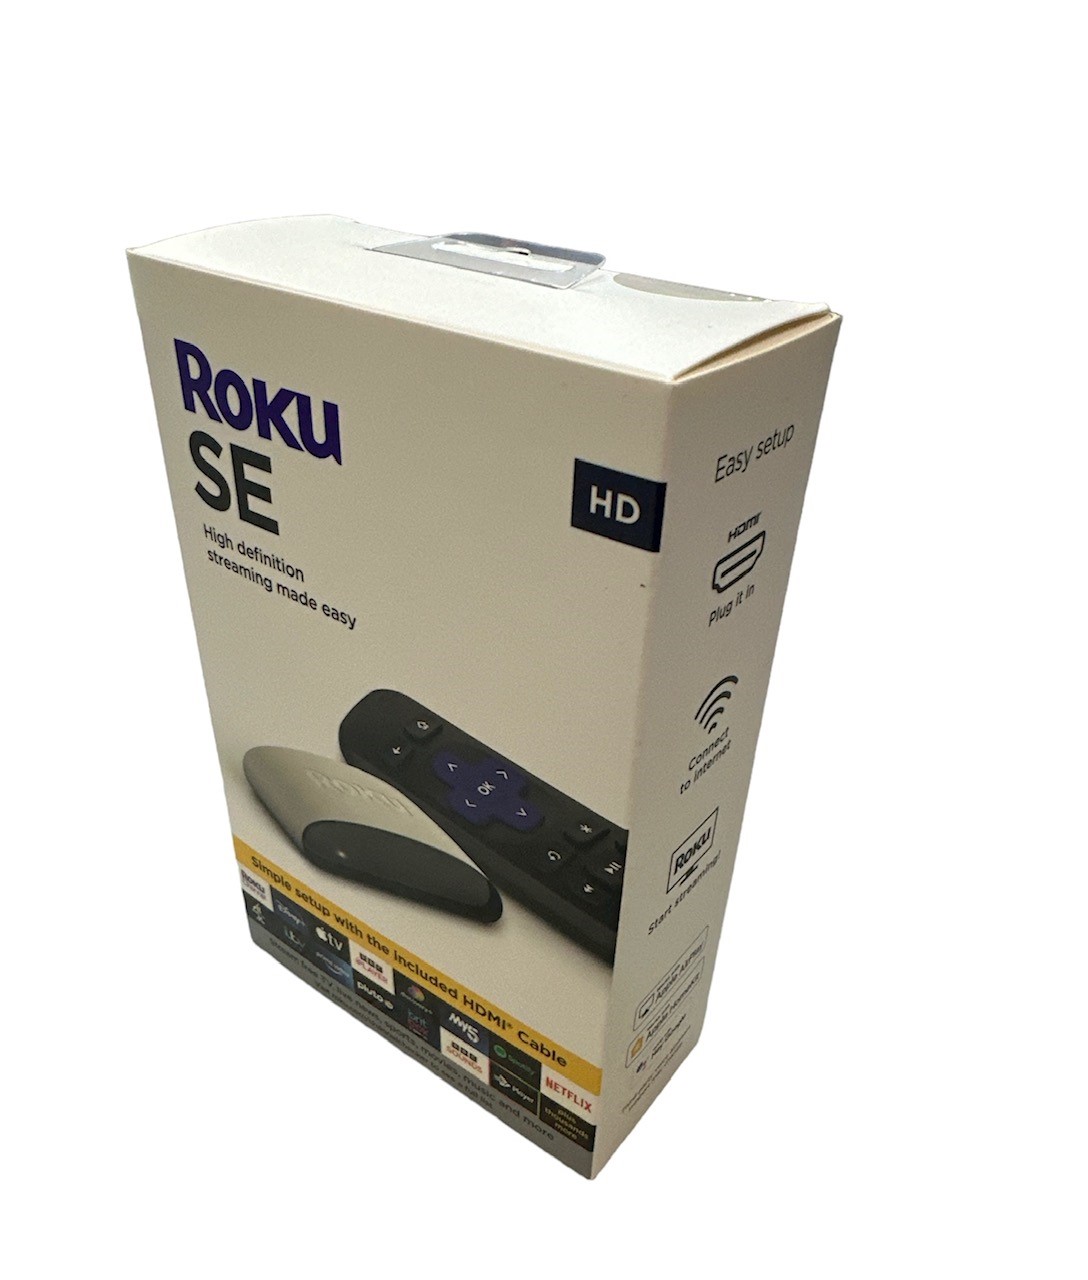 Roku SE HD Boxed Sealed - HD Streaming